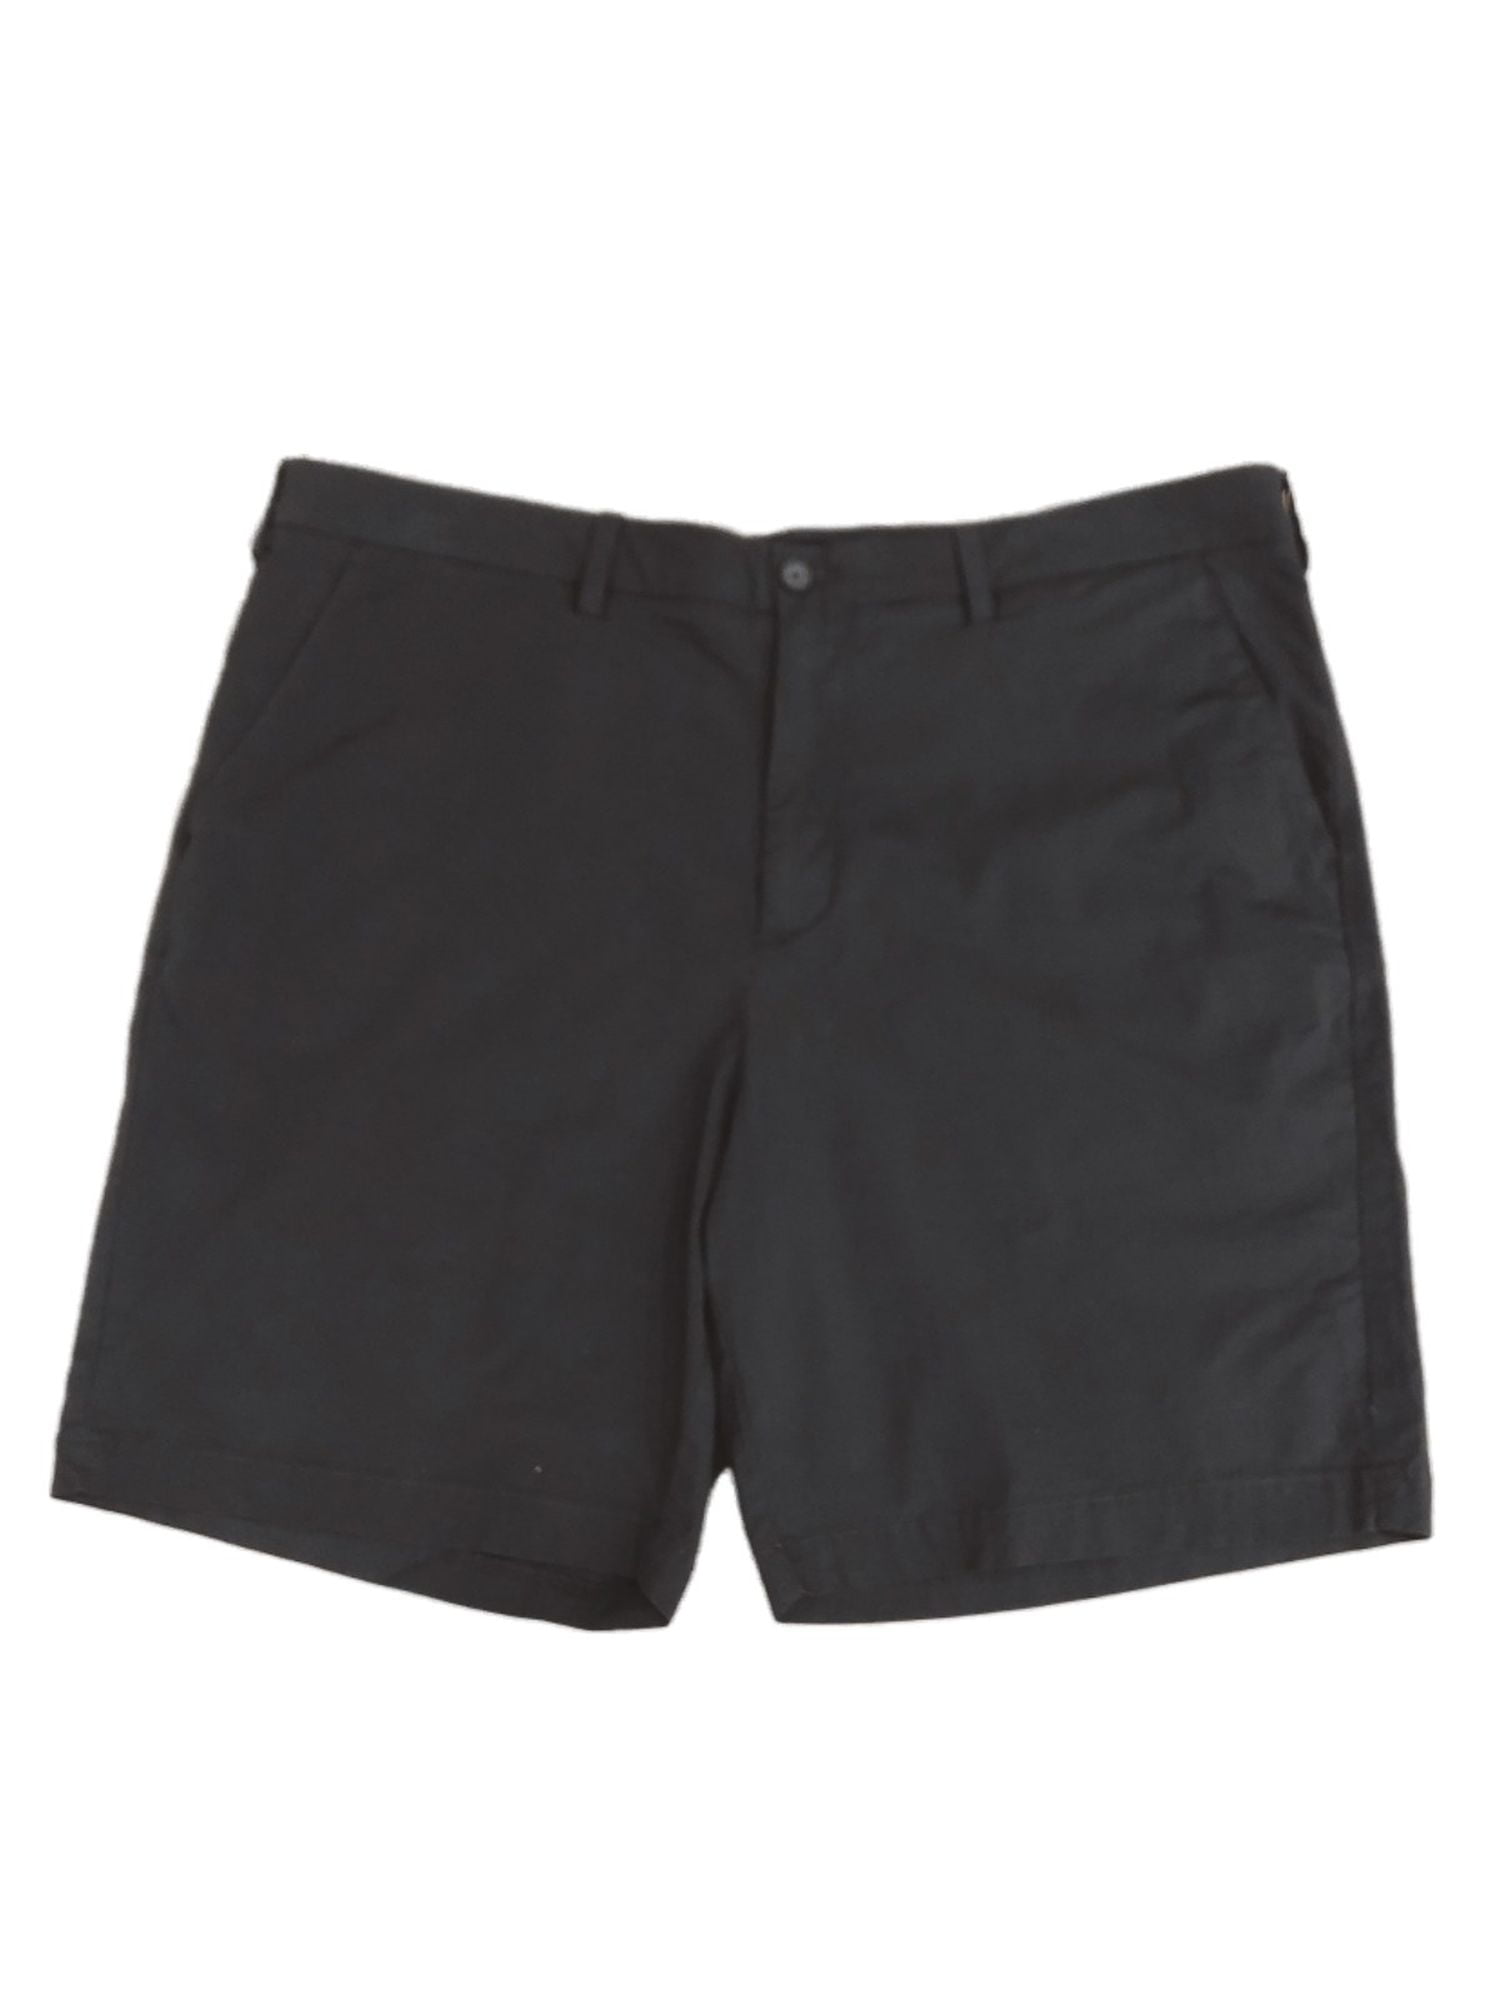 NEW Apt 9 Men's Shorts Modern Fit Cotton size 30 42 40 